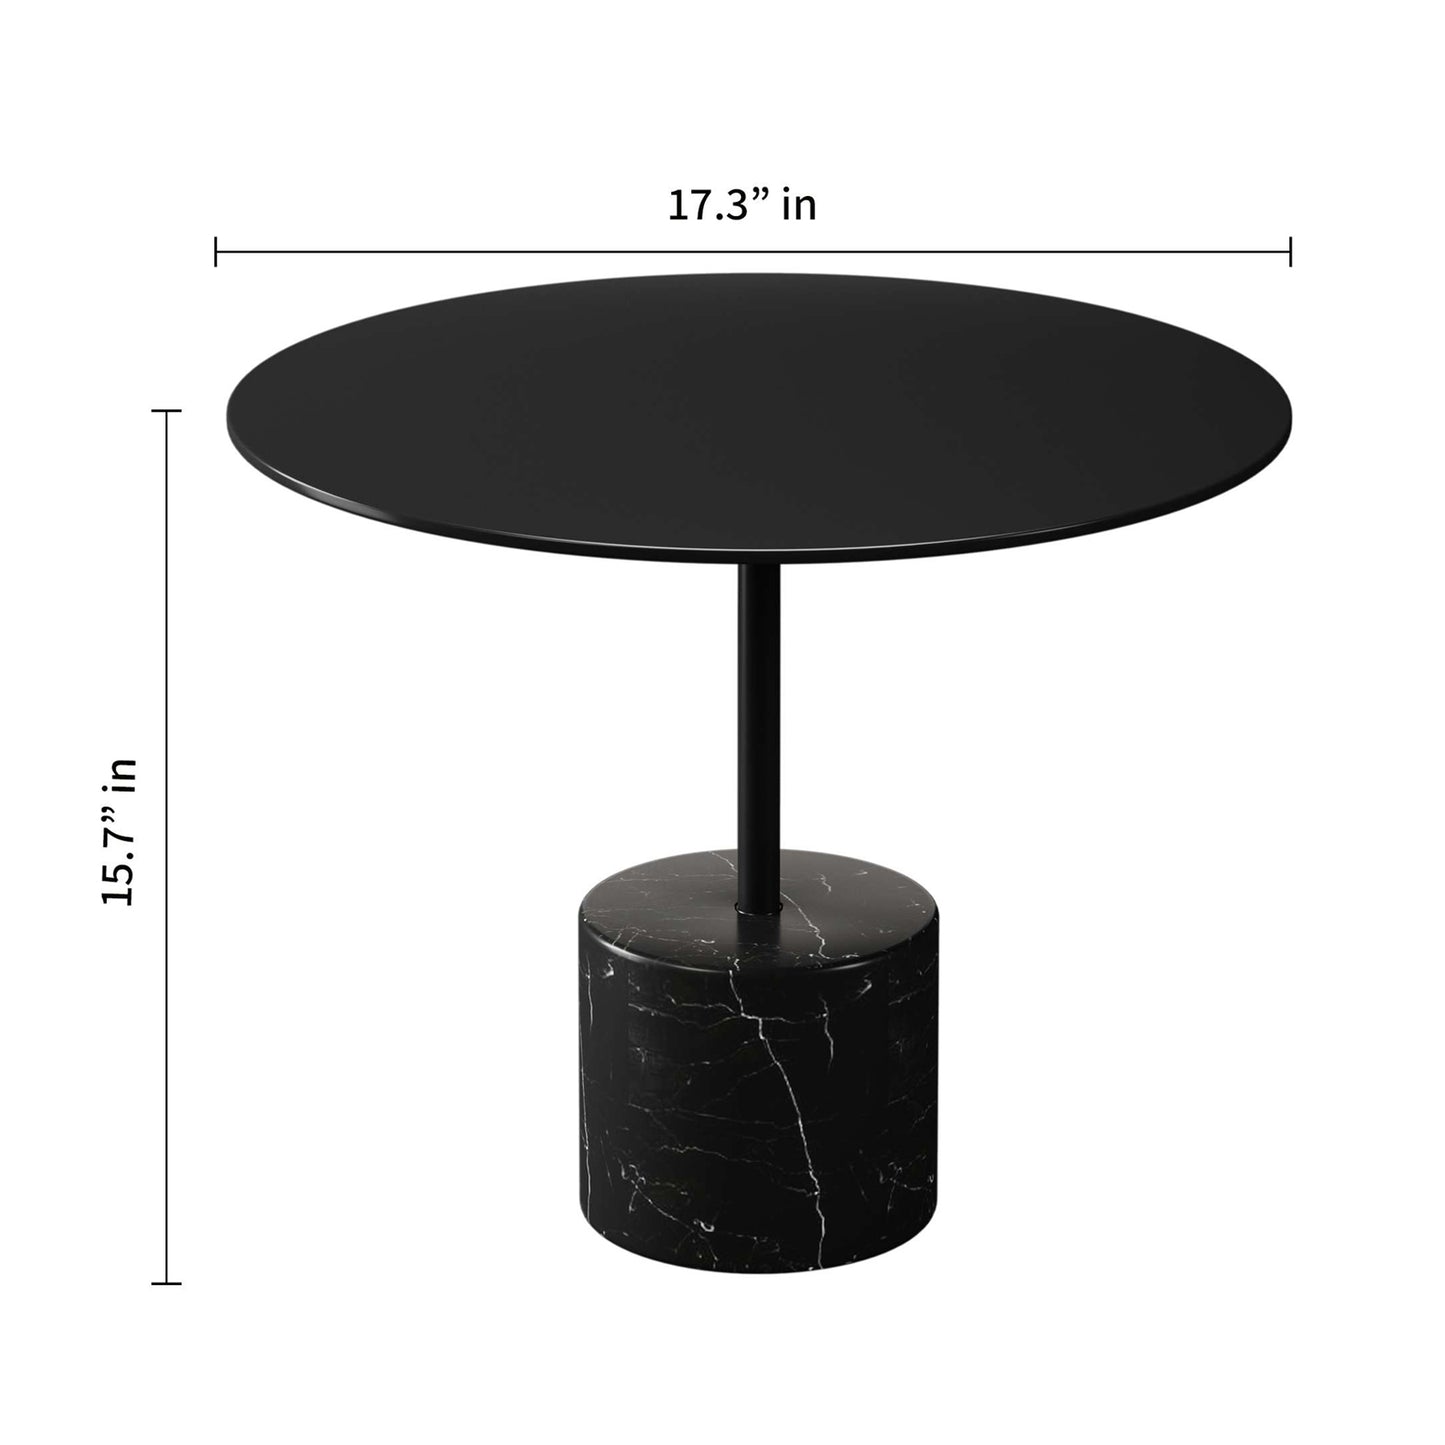 Poke Coffee Table, Black